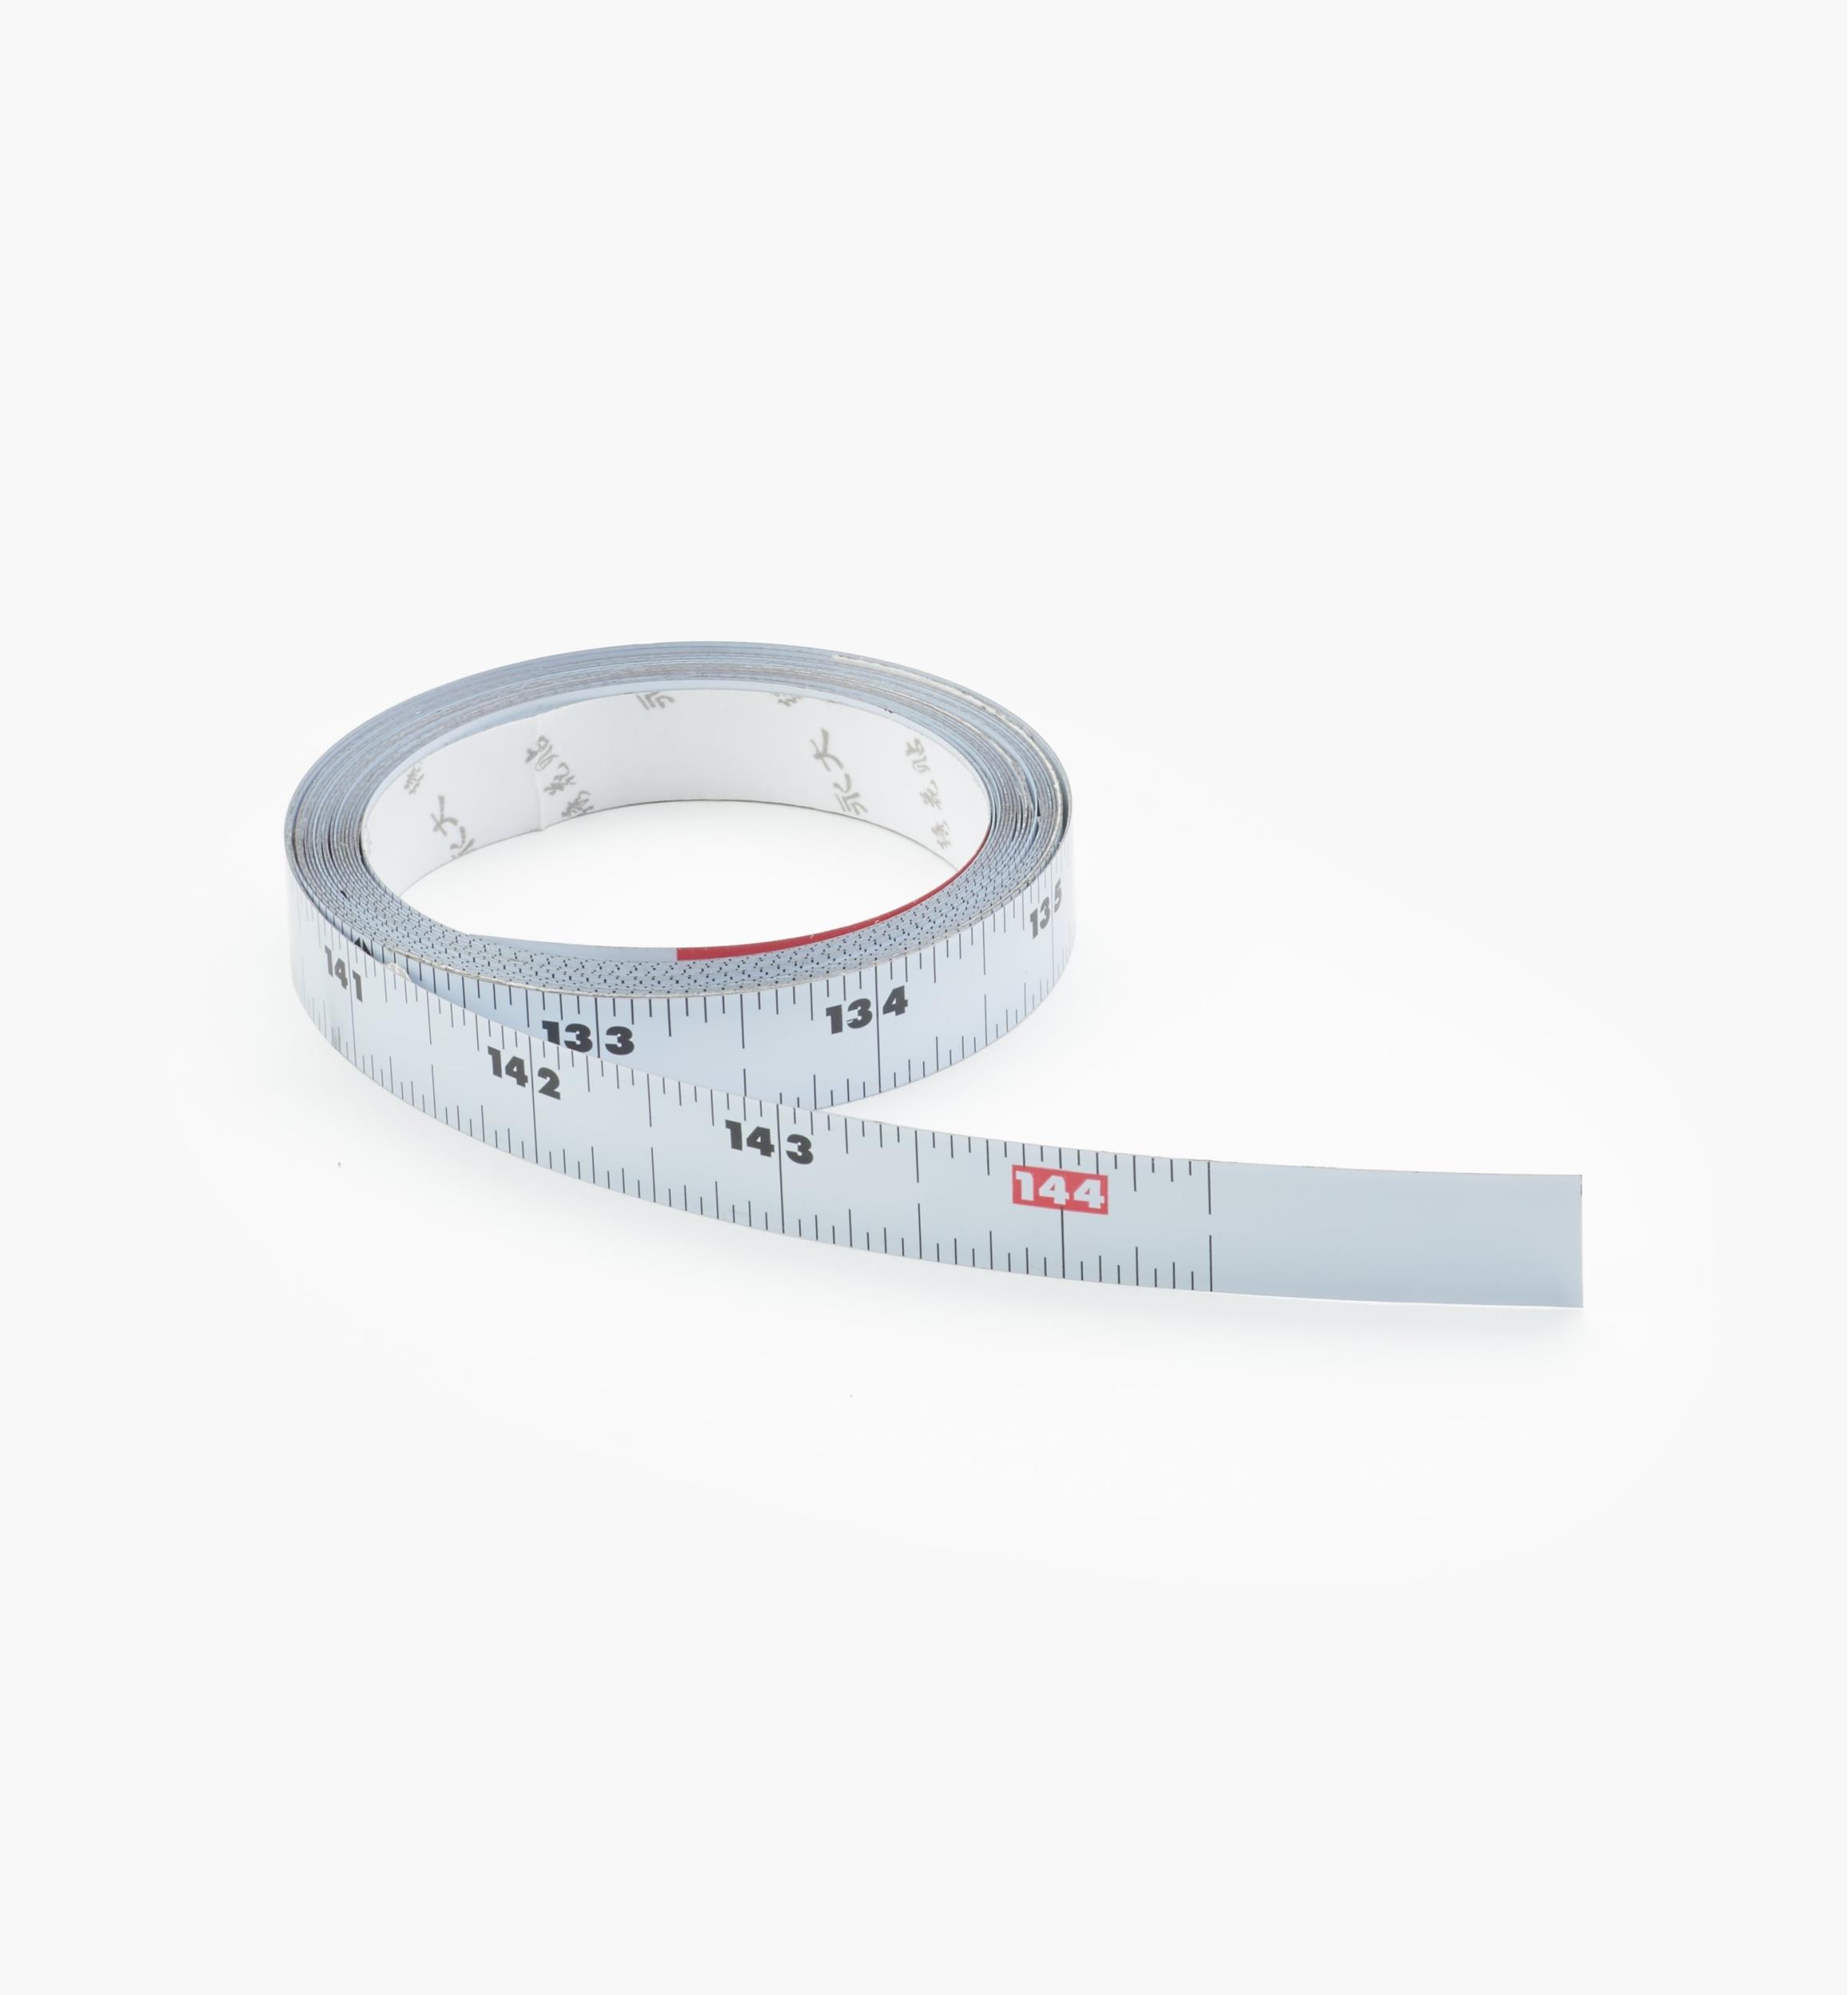 2pcs Workbench Ruler Adhesive Backed Tape Measure 2M,3M 